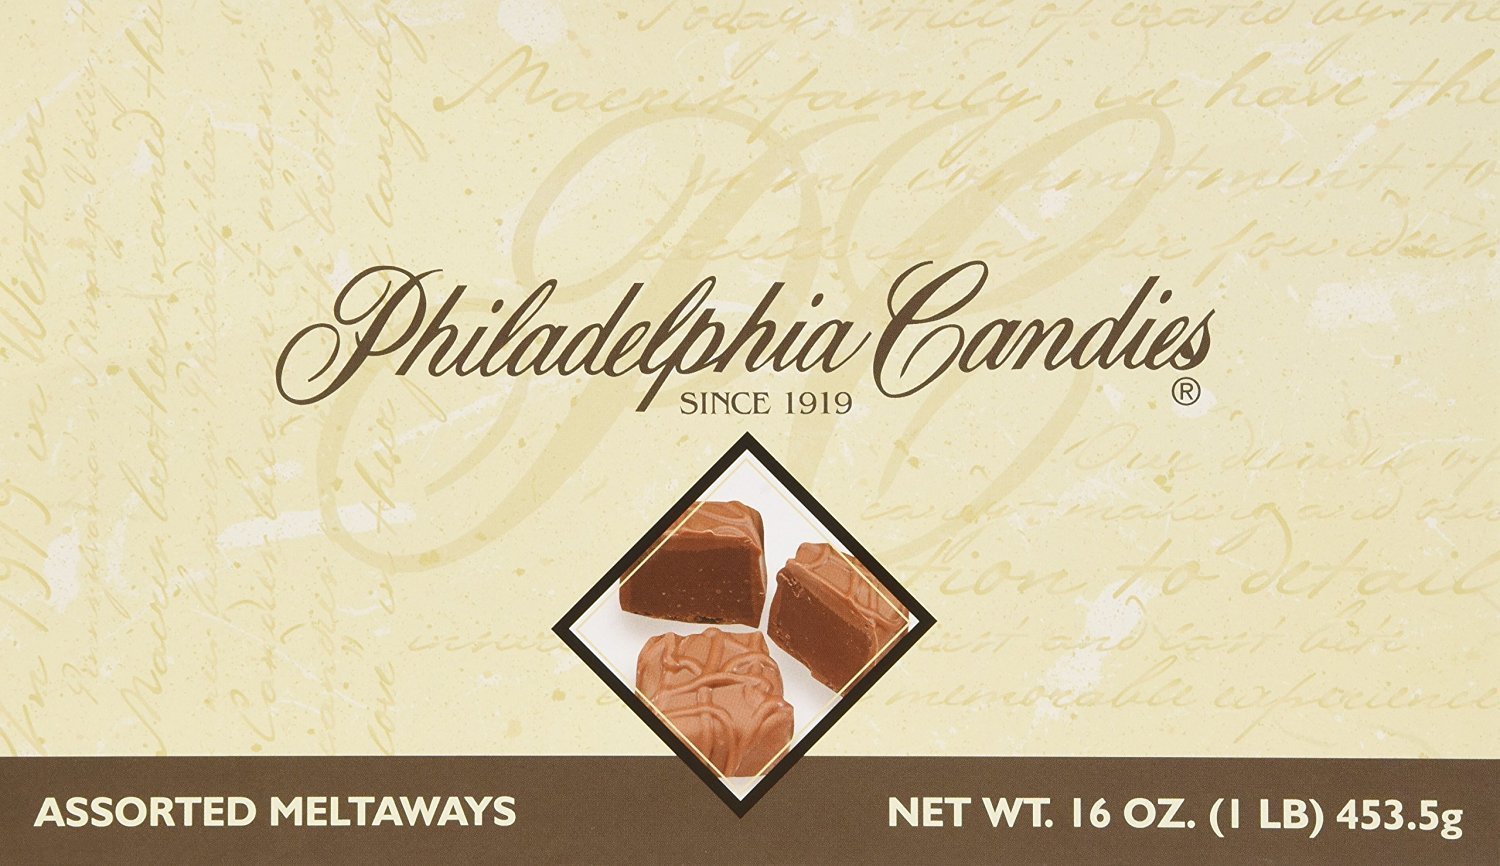 Philadelphia Candies Assorted Meltaway Truffles, Milk Chocolate 1 pound Gift Box